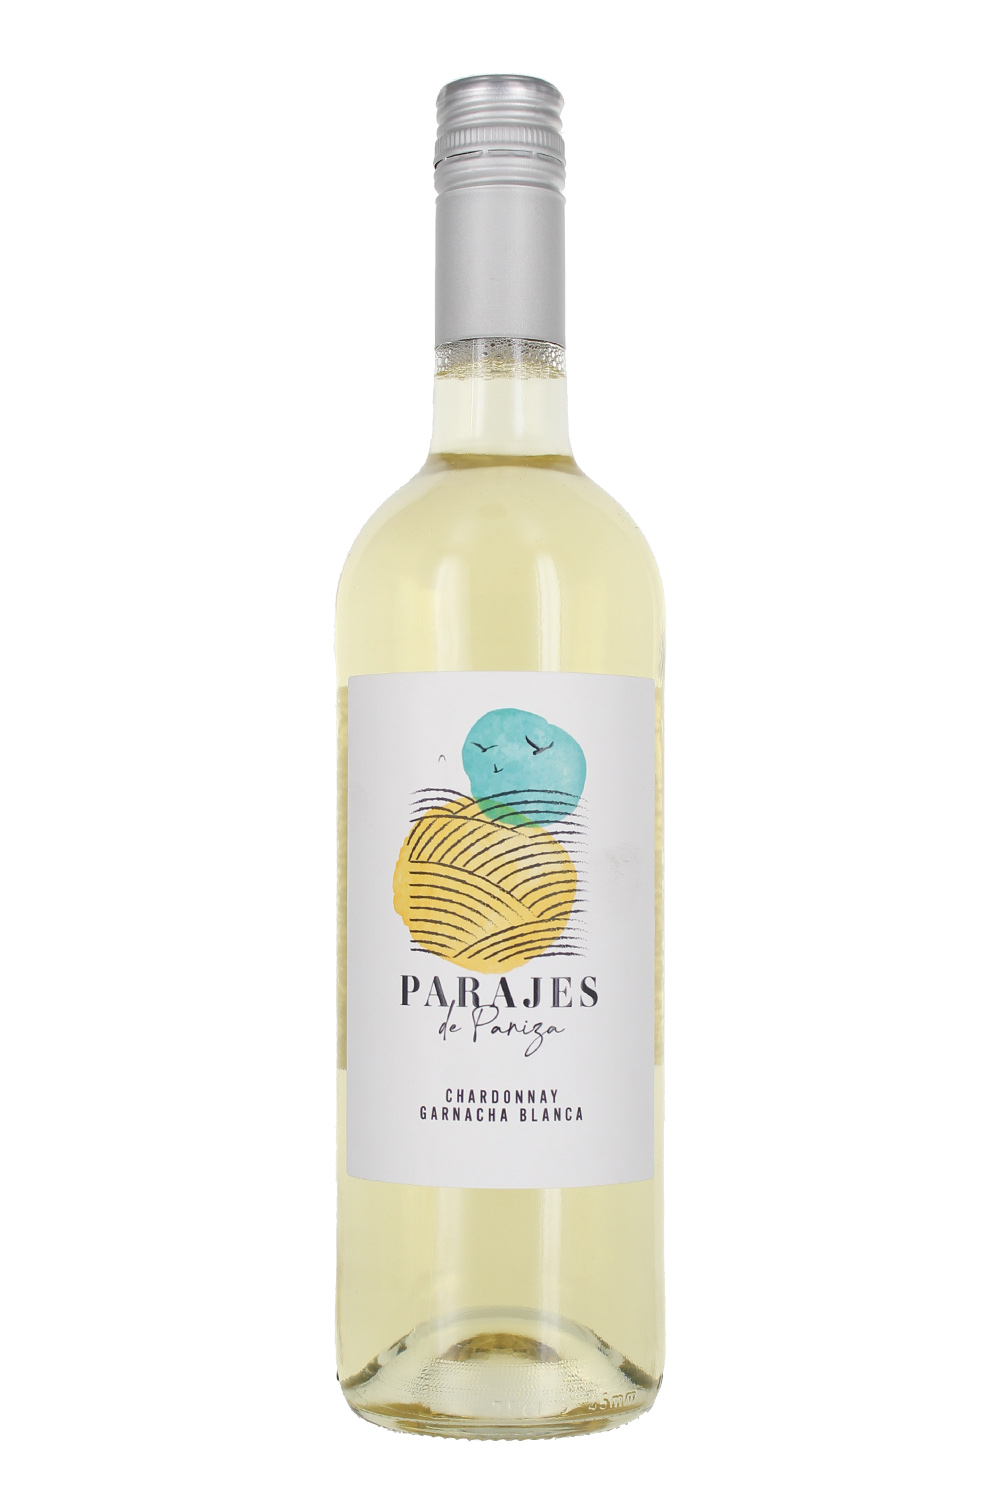 Jeroboams Blanca, Chardonnay Parajes de 2021 Paniza - Garnacha